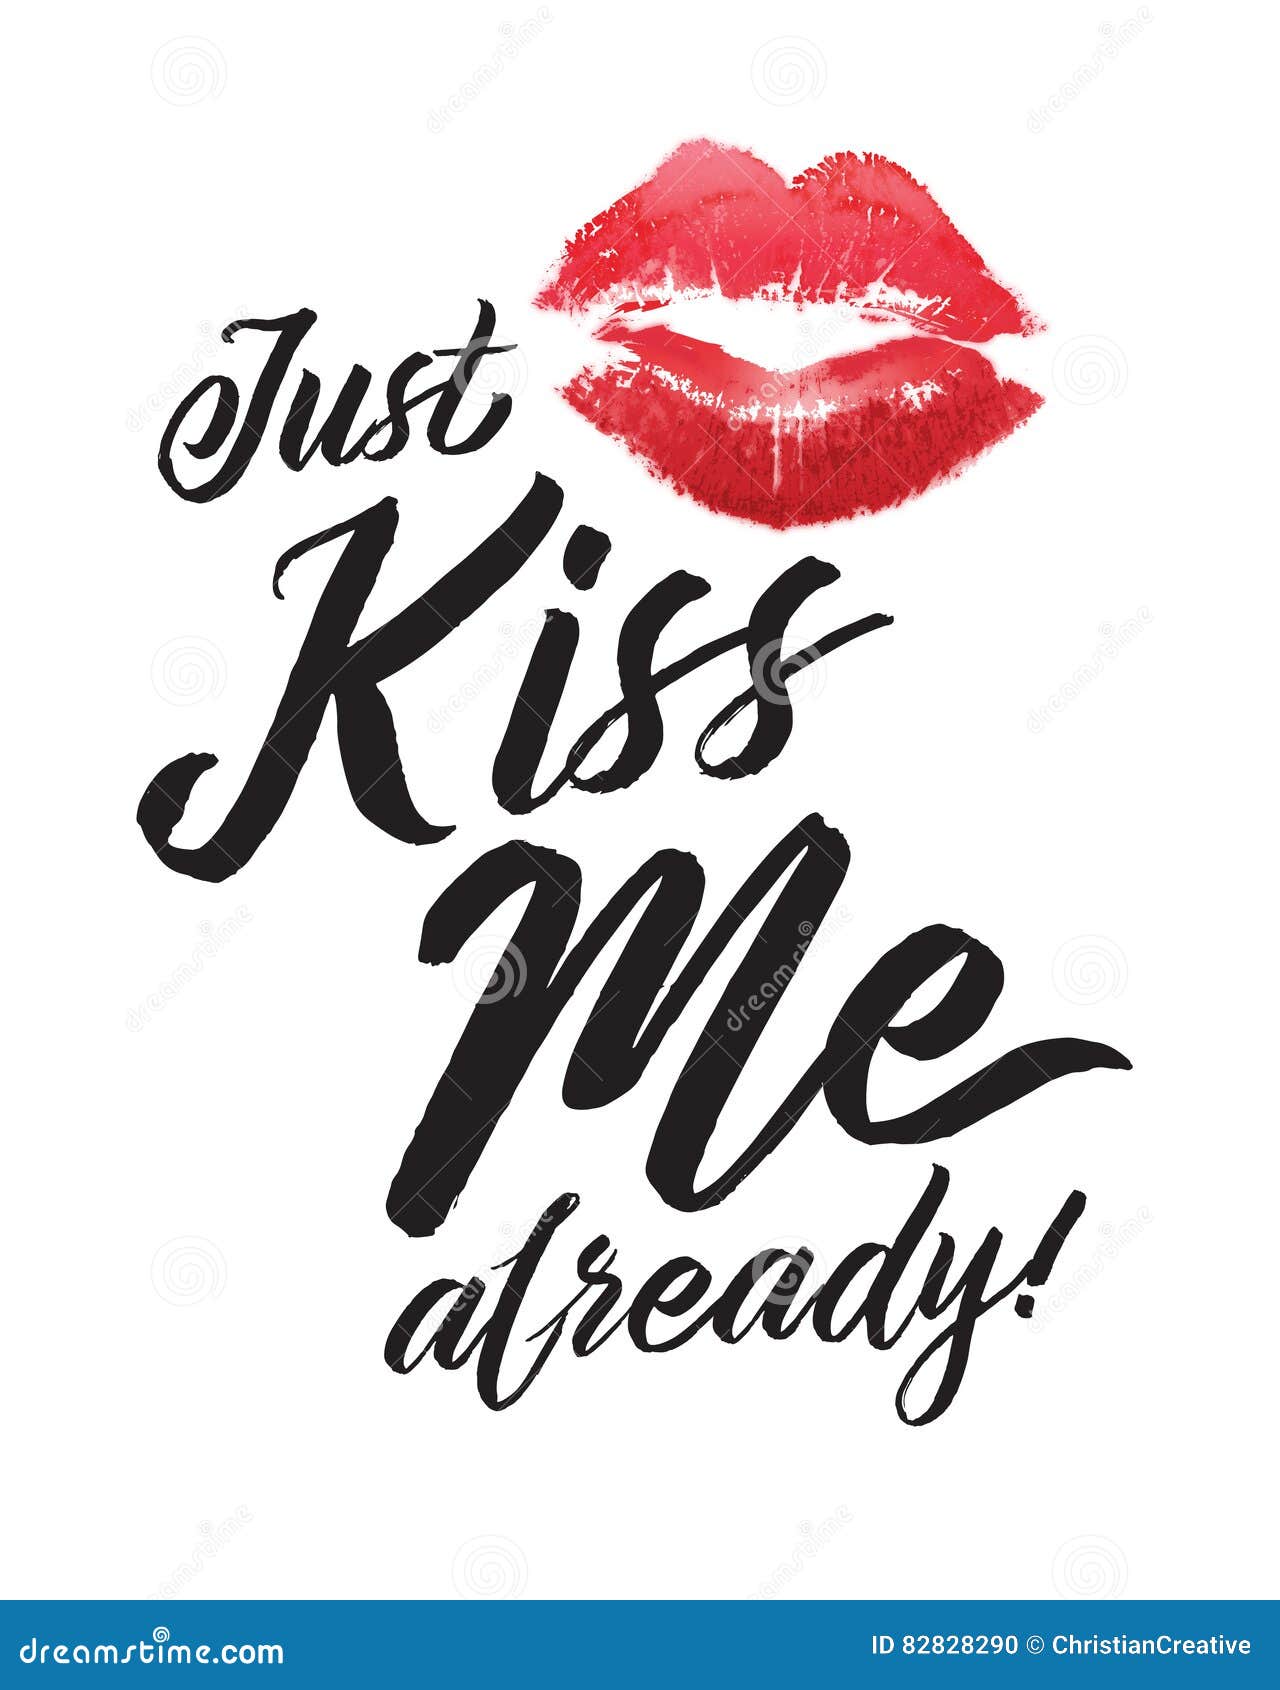 just kiss me already!